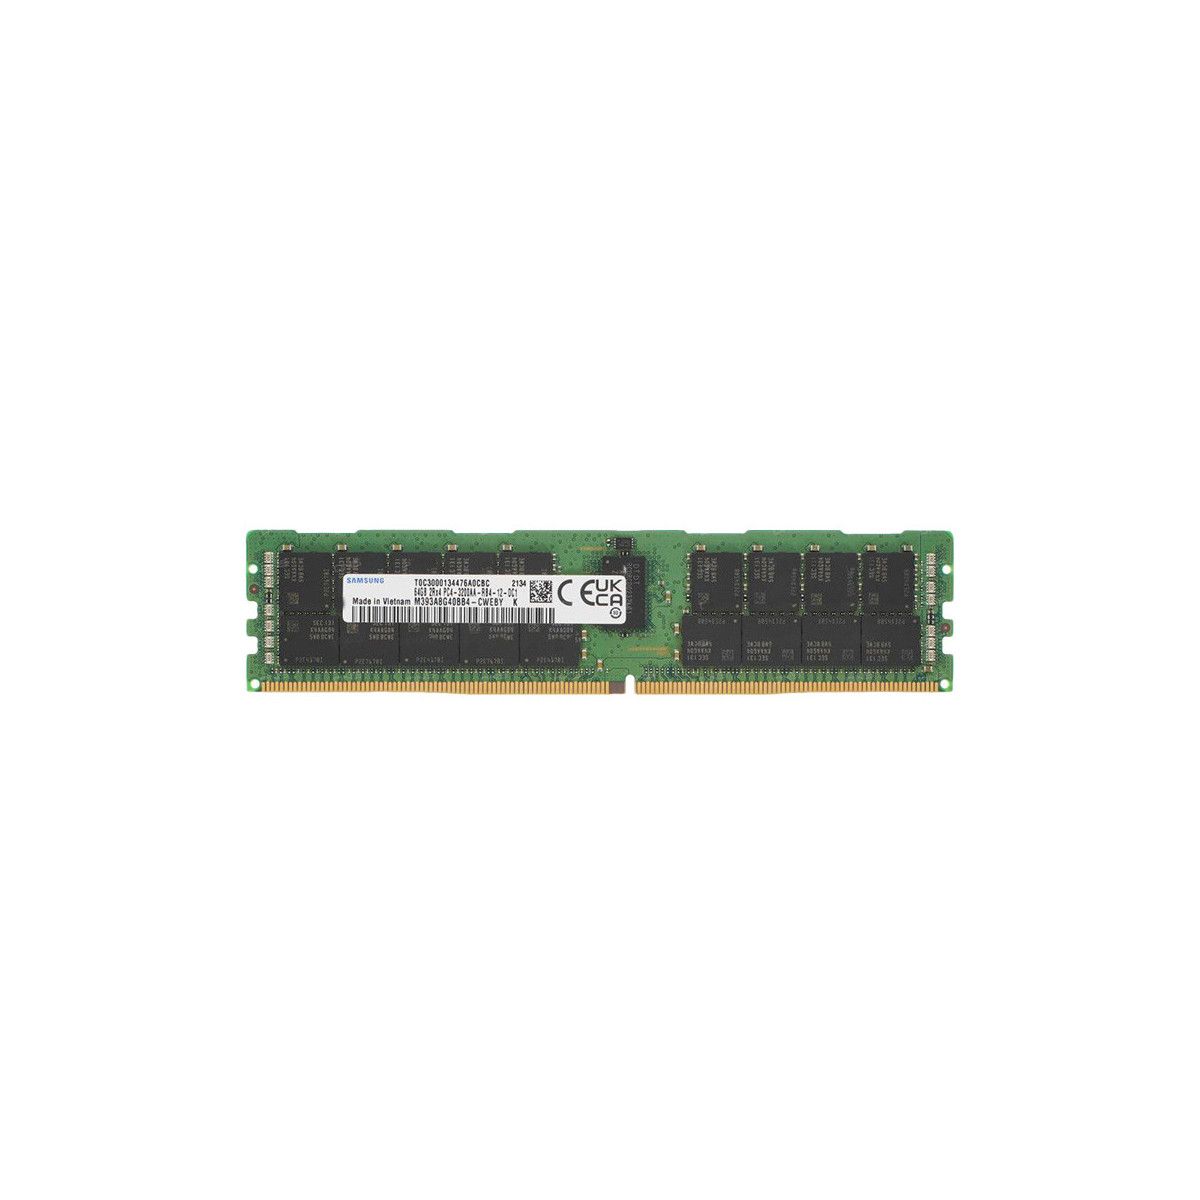 P06035-H21-MS - Memstar 1x 64GB DDR4-3200 RDIMM PC4-25600R - Mem-star Compatible OEM Mémoire 1 - Memstar 